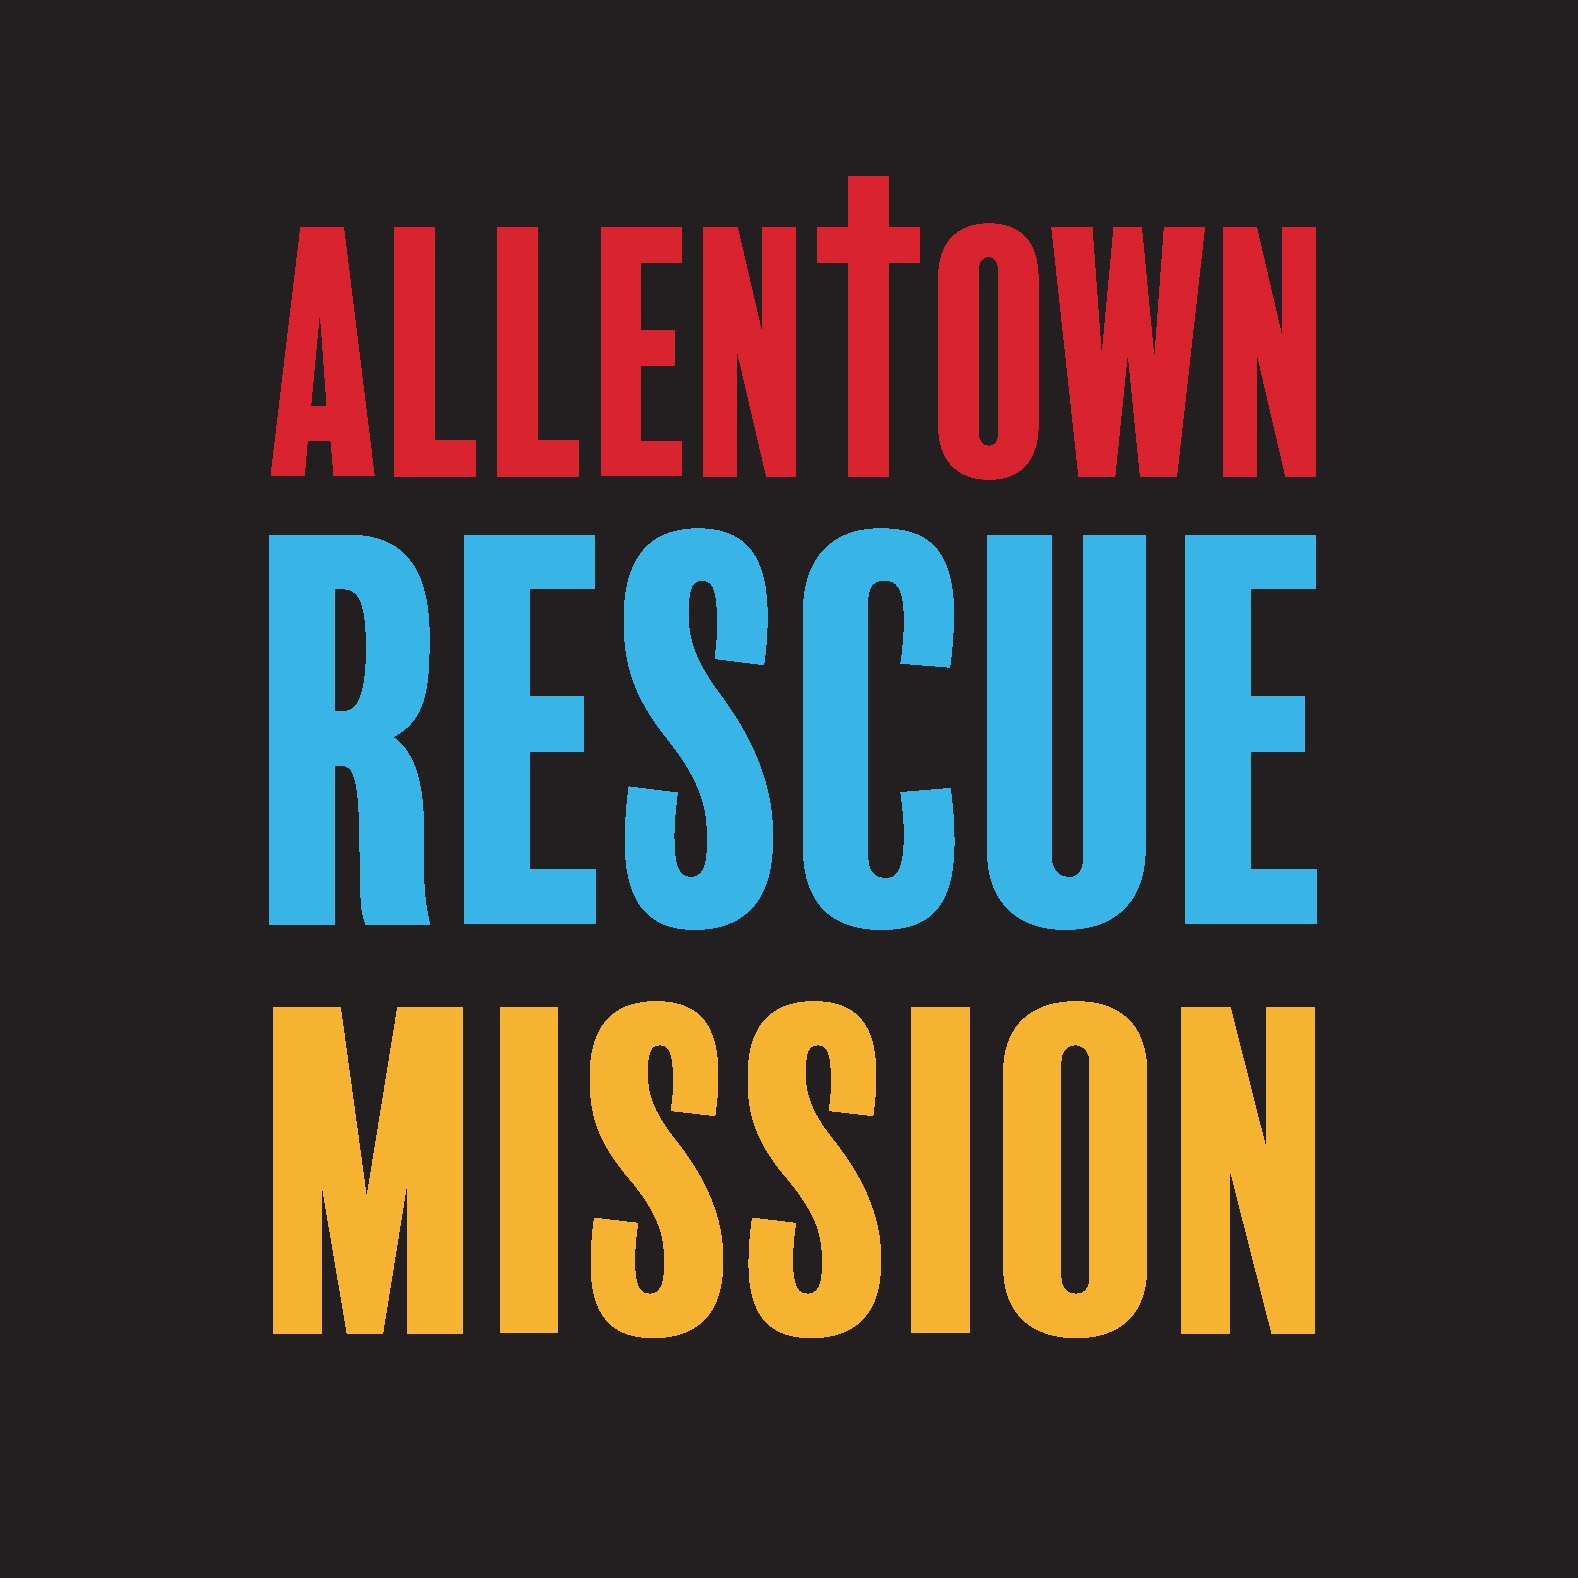 Allentown Rescue Mission